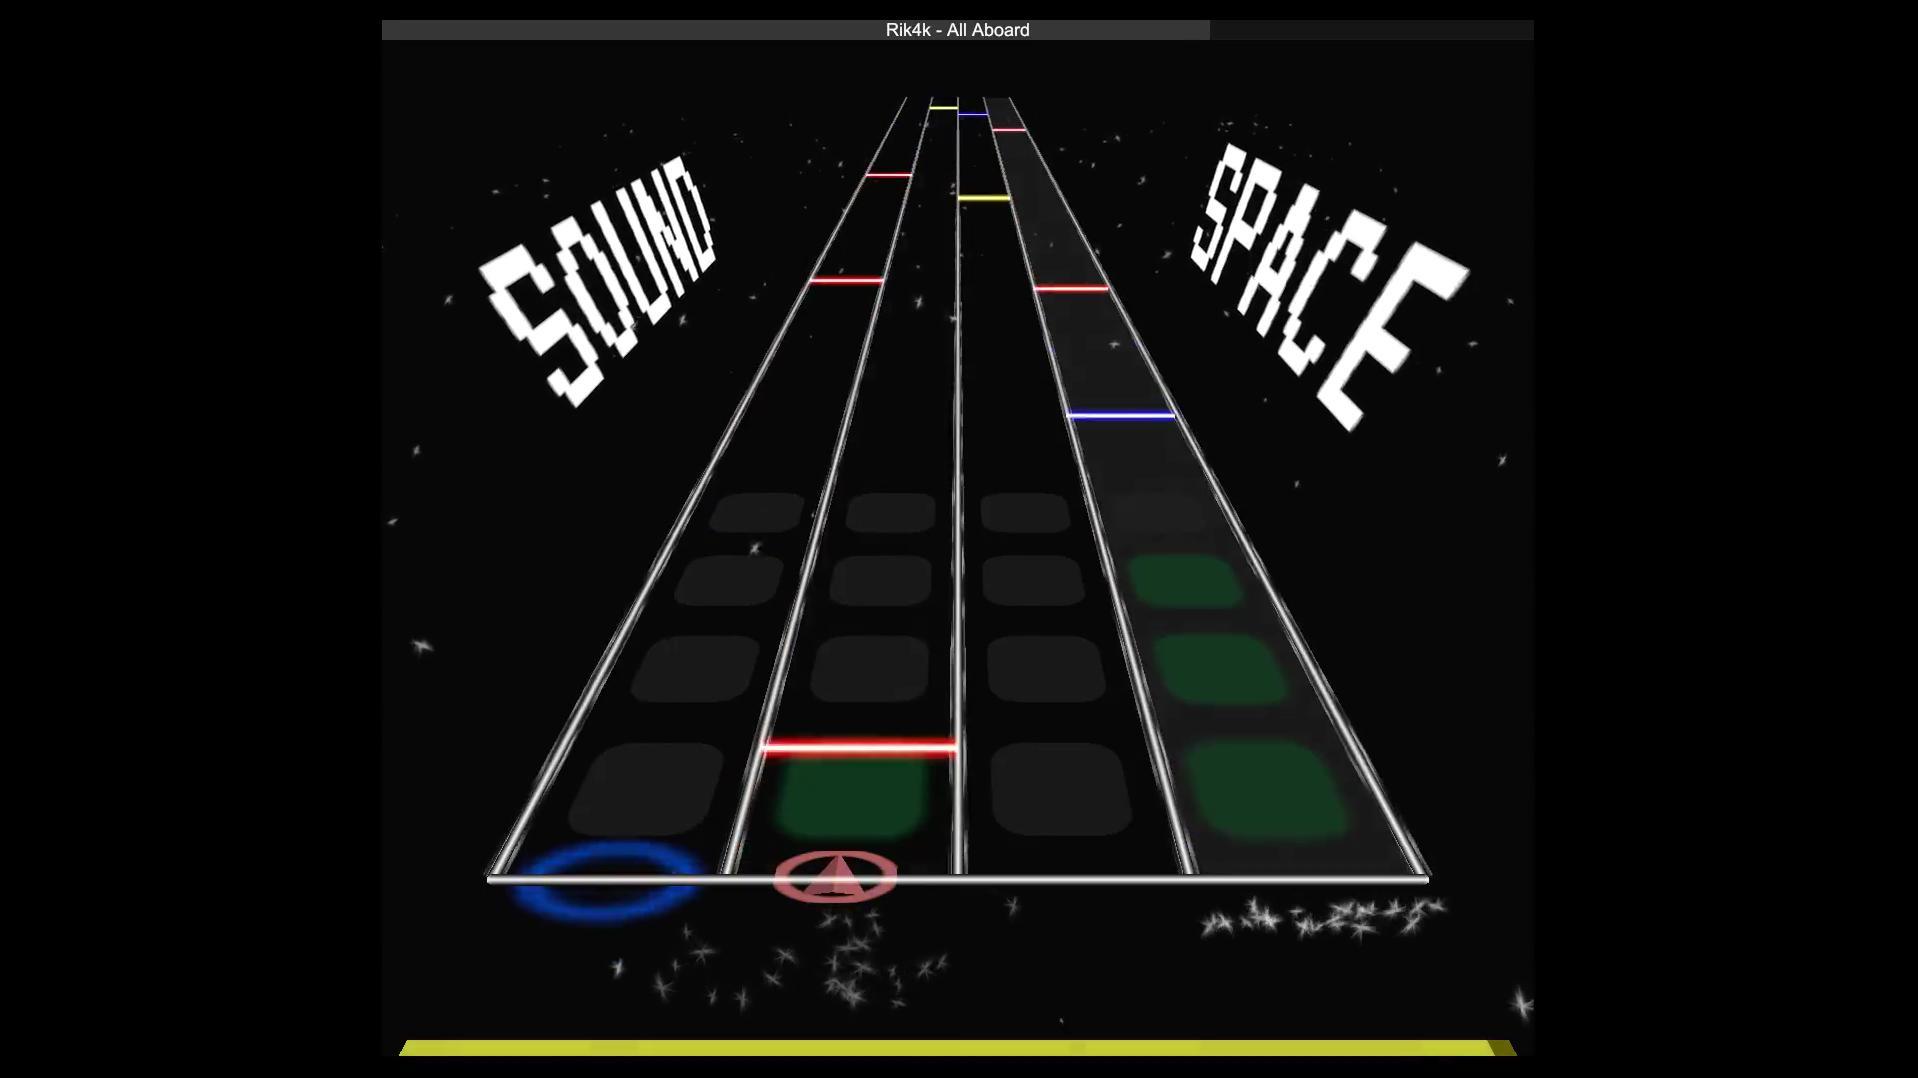 Играй звук 1. Sound of игра. Sound Space. Саунд Спейс игра. Space Rhythm game.